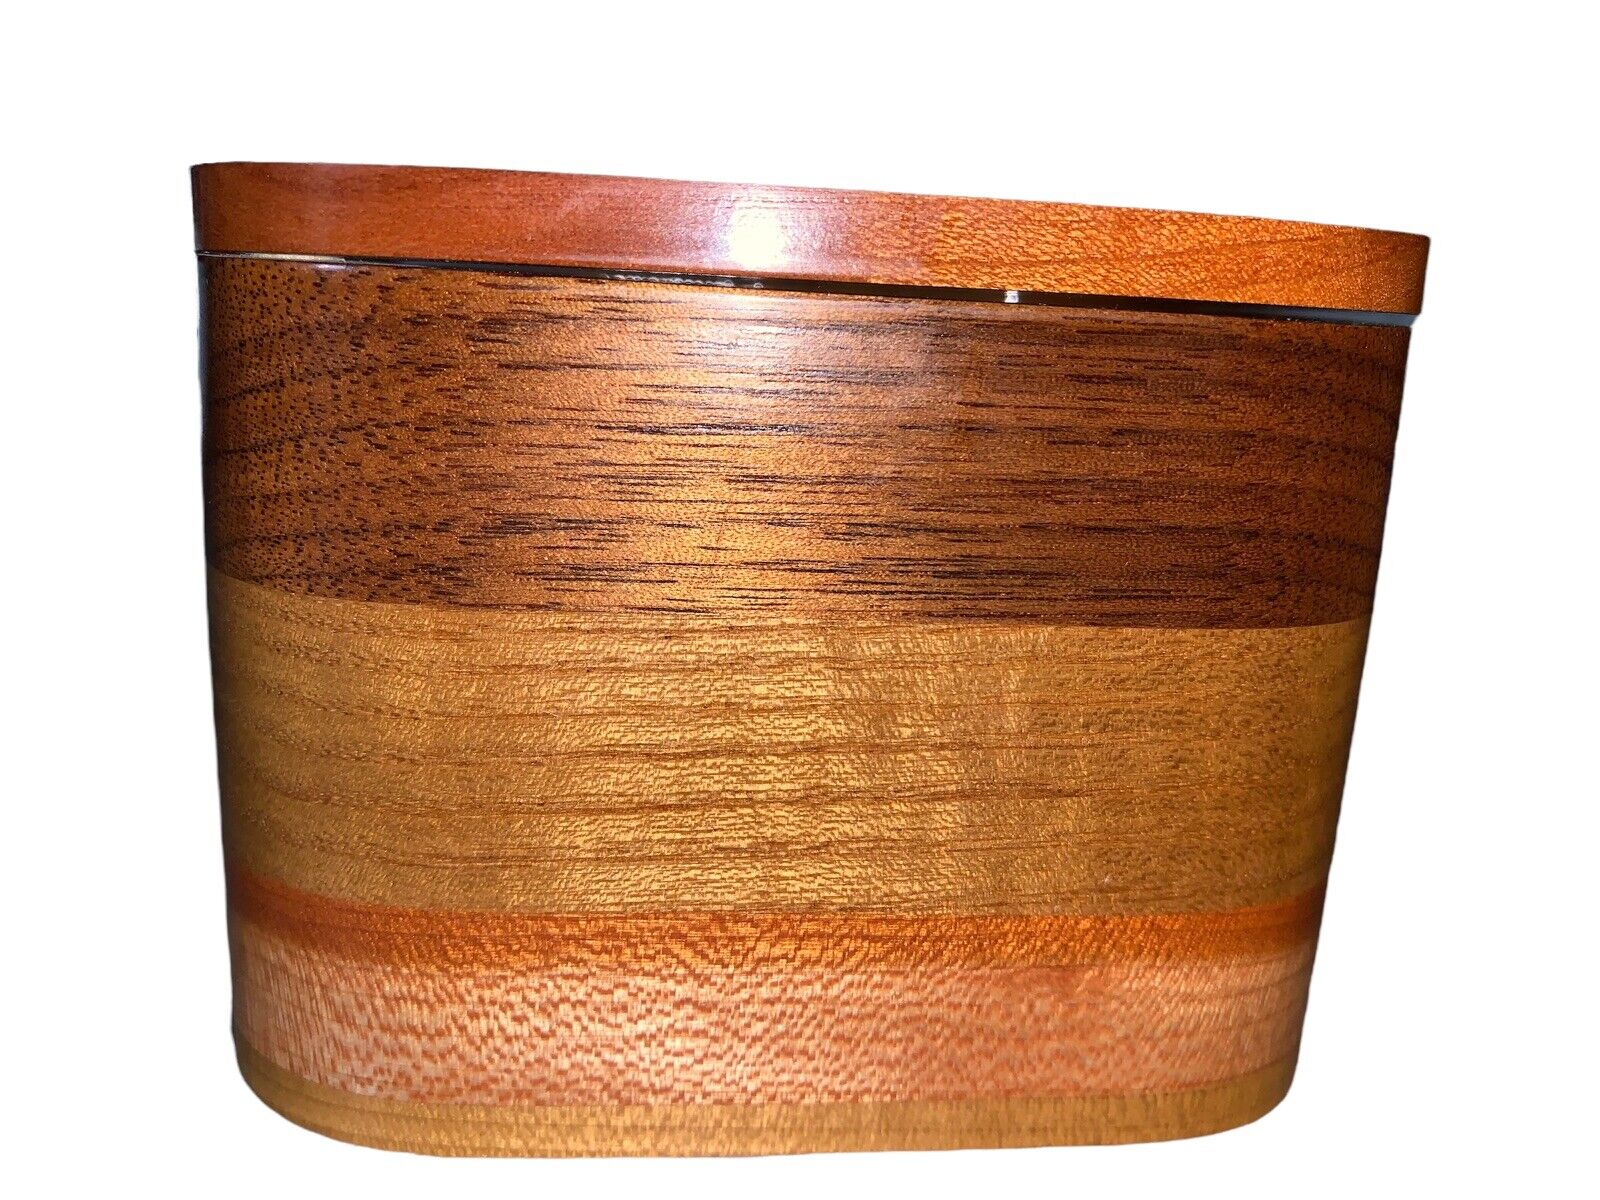 Handmade Rare Small Wood Box Hinged Lid 3 Tone 3”x 2.75”